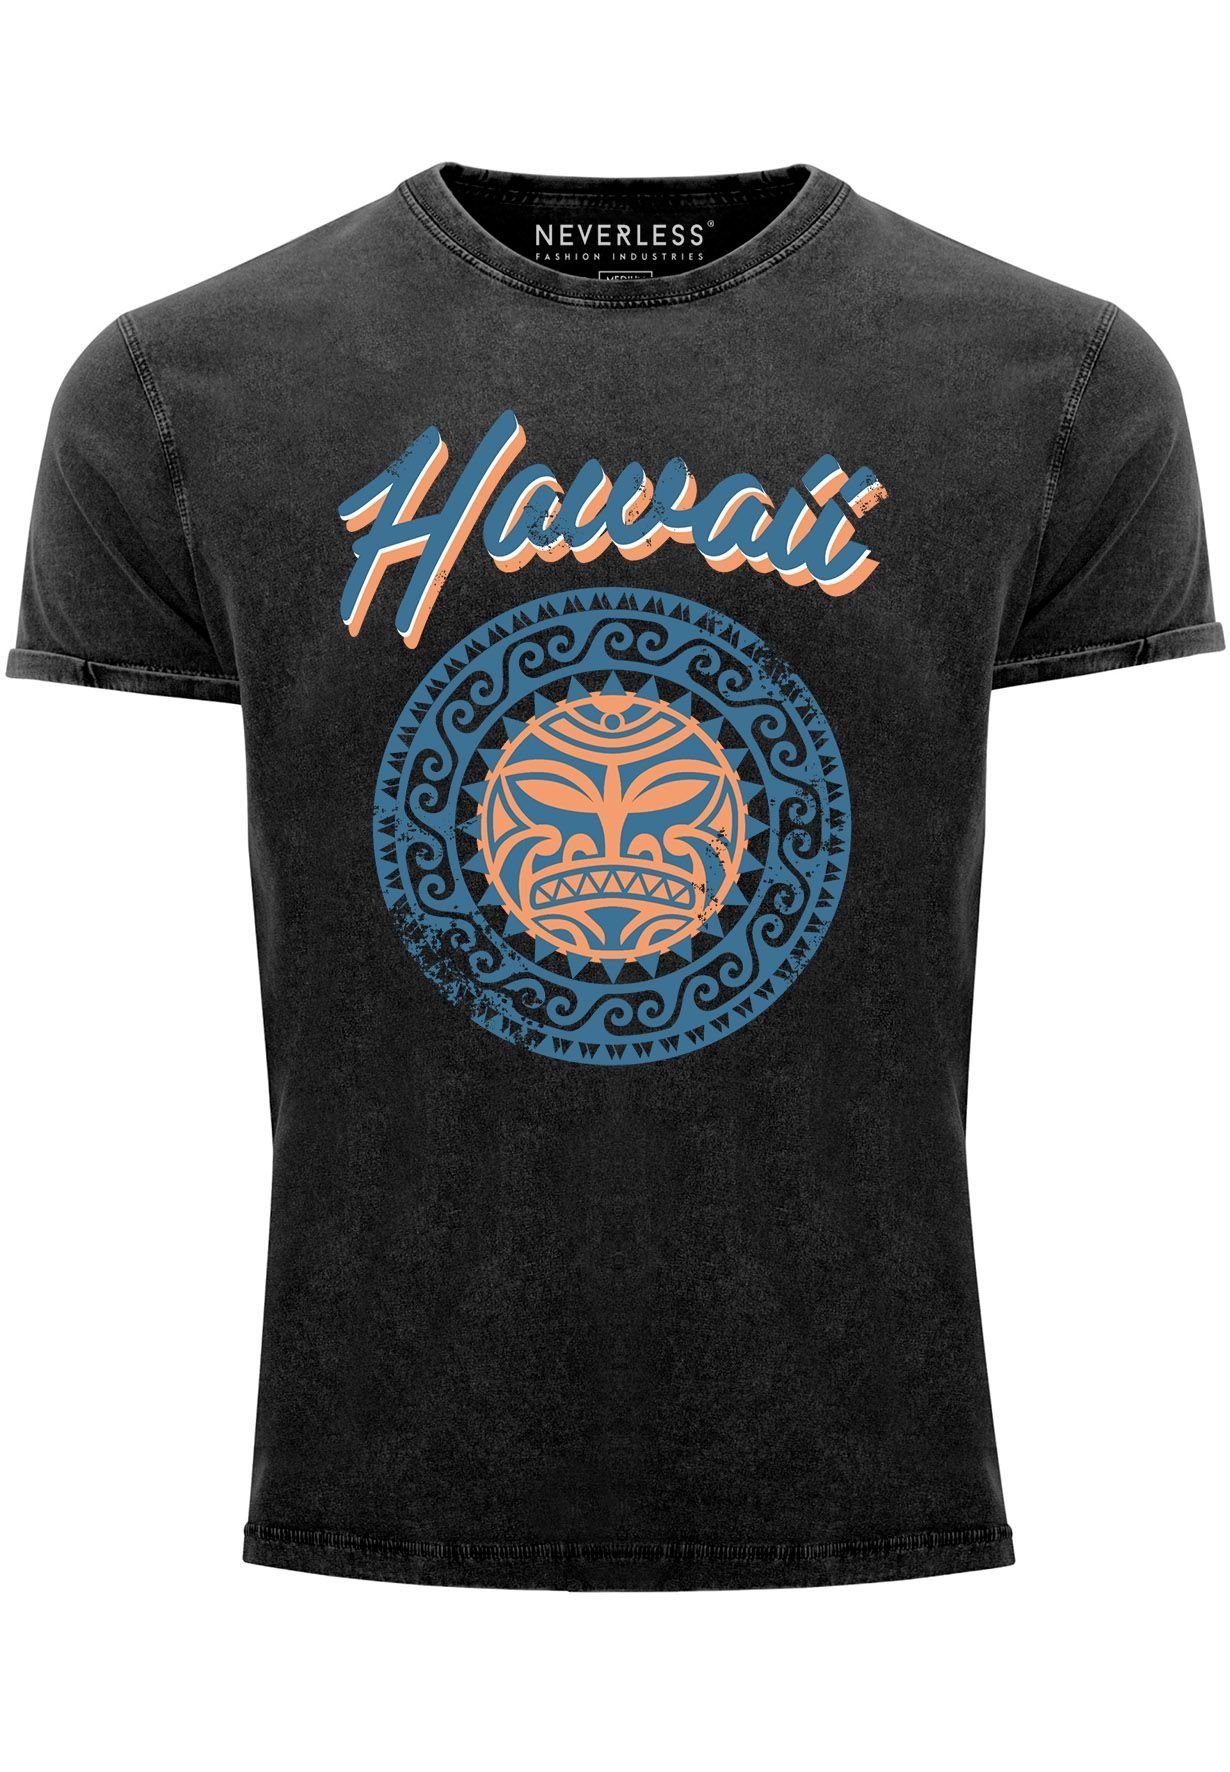 Neverless Print-Shirt Herren T-Shirt Hawaii Tattoo Tribal Maui Ethno Style Printshirt Vintag mit Print schwarz